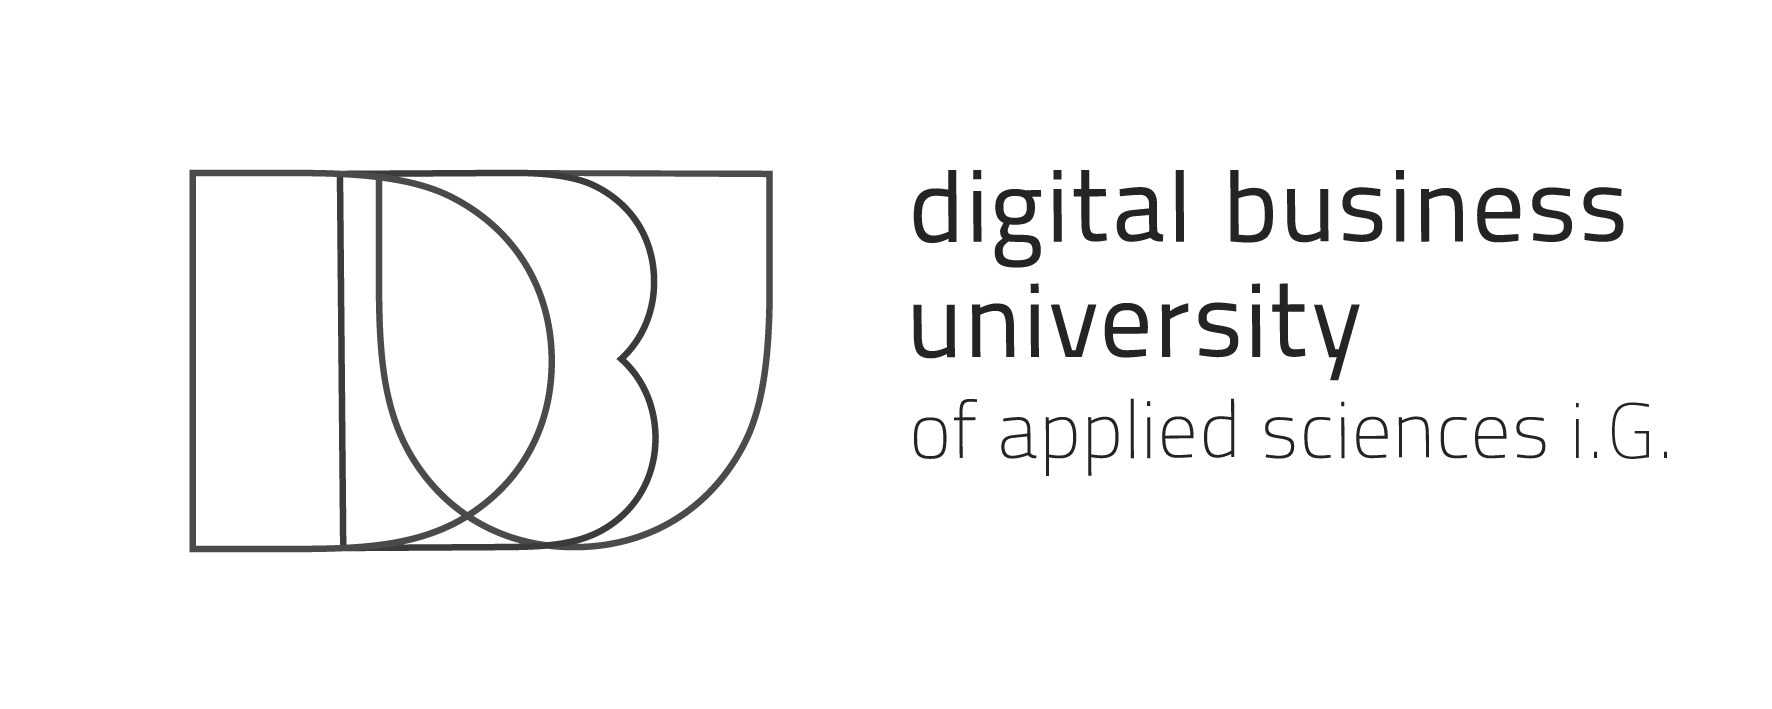 Digital Business University logo